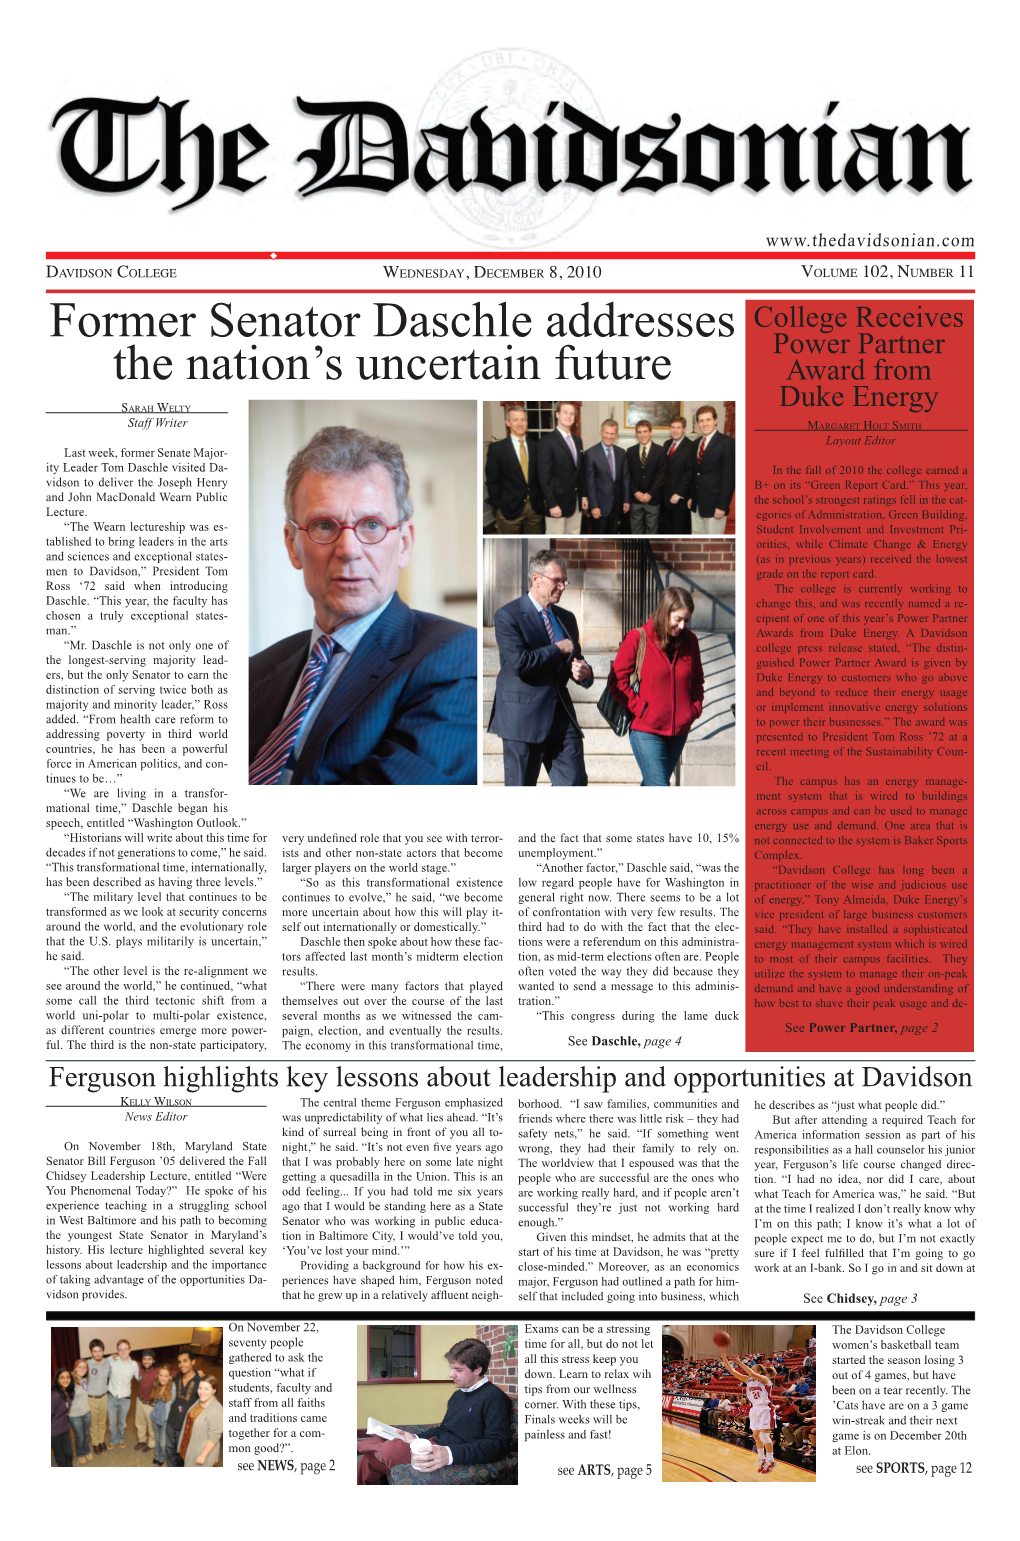 Former Senator Daschle Addresses the Nation's Uncertain